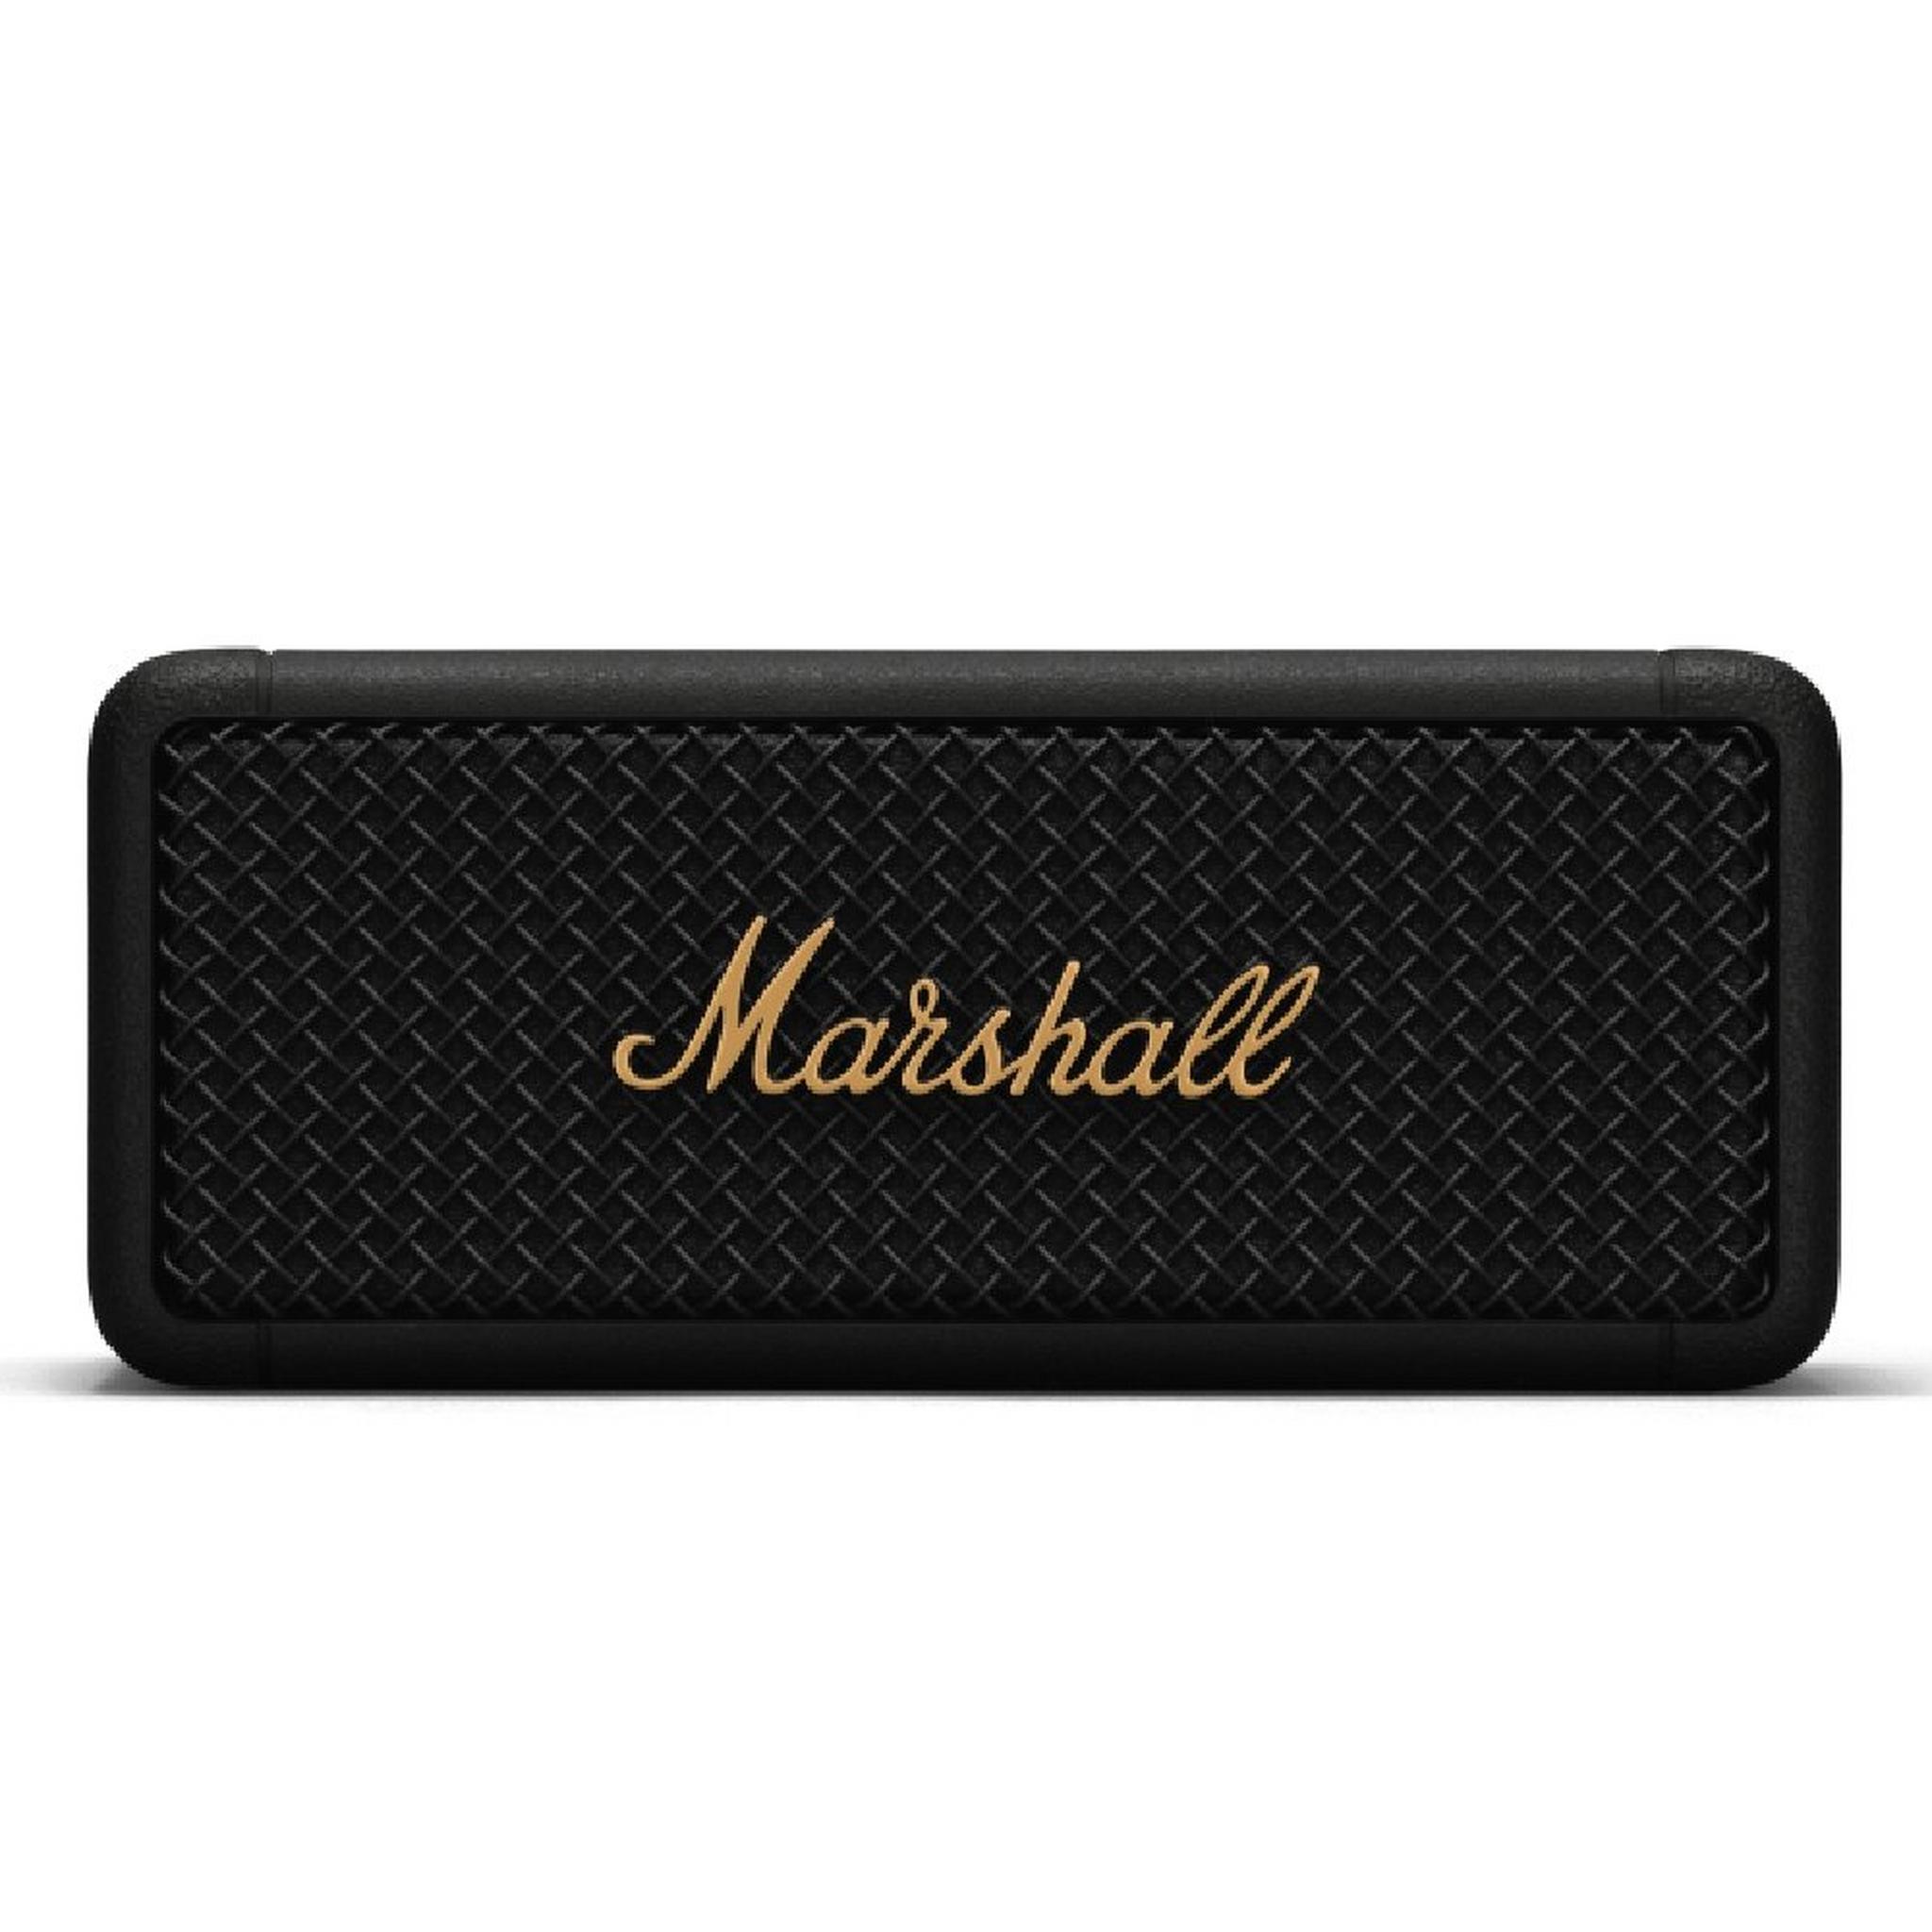 Marshall Emberton Portable Speaker - Black and Brass